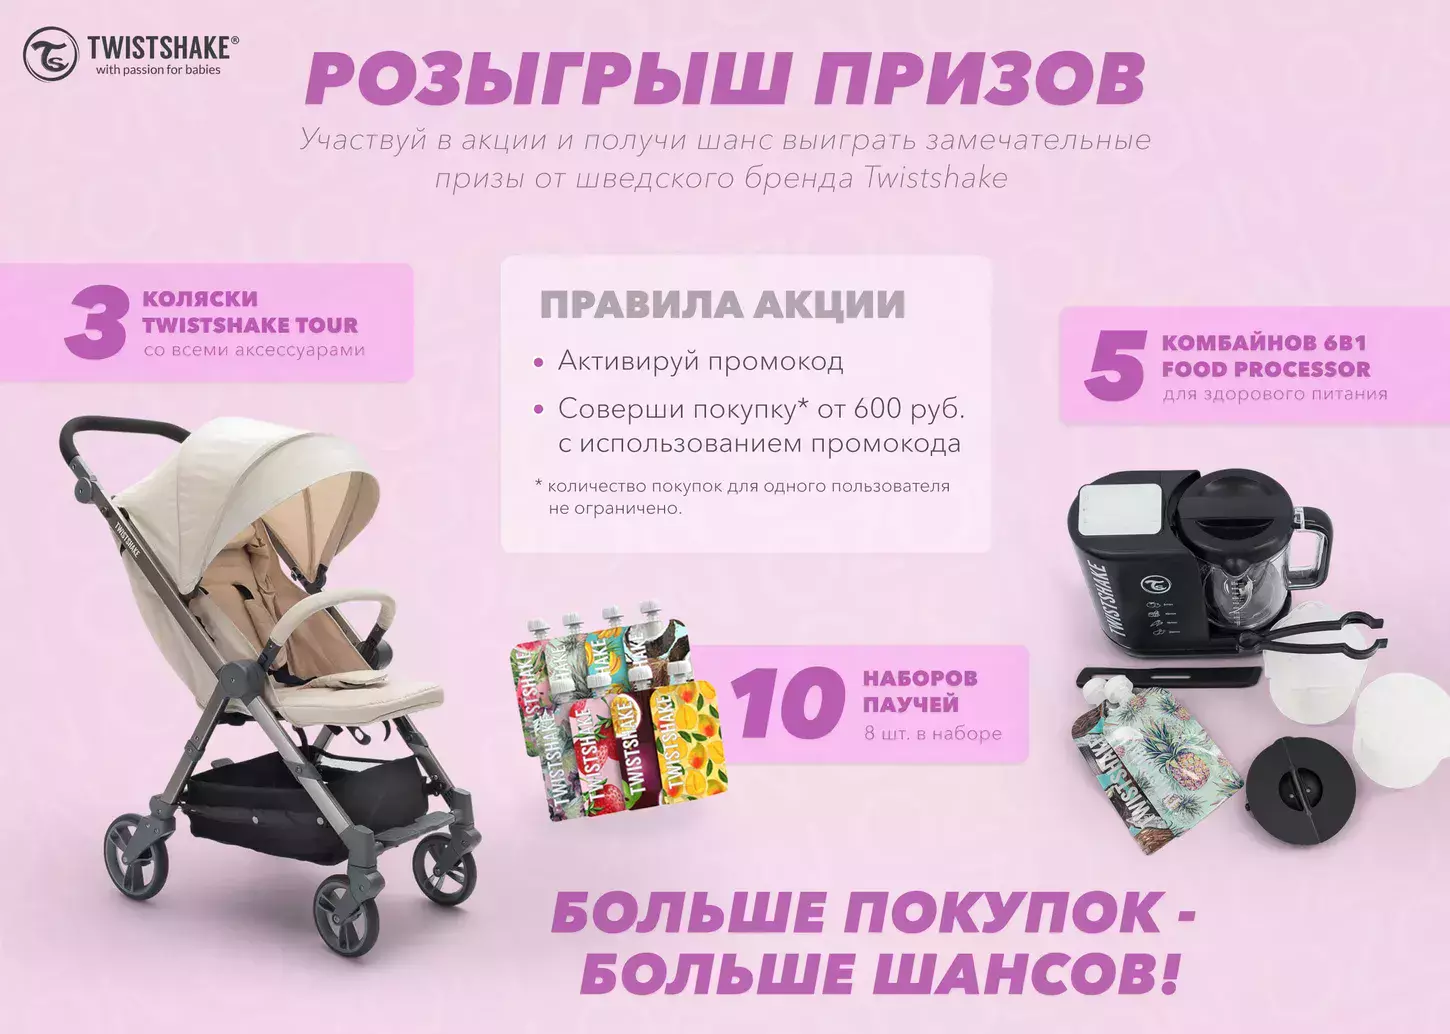 Акция Twistshake и Ozon.ru: «Twistshake дарит подарки»